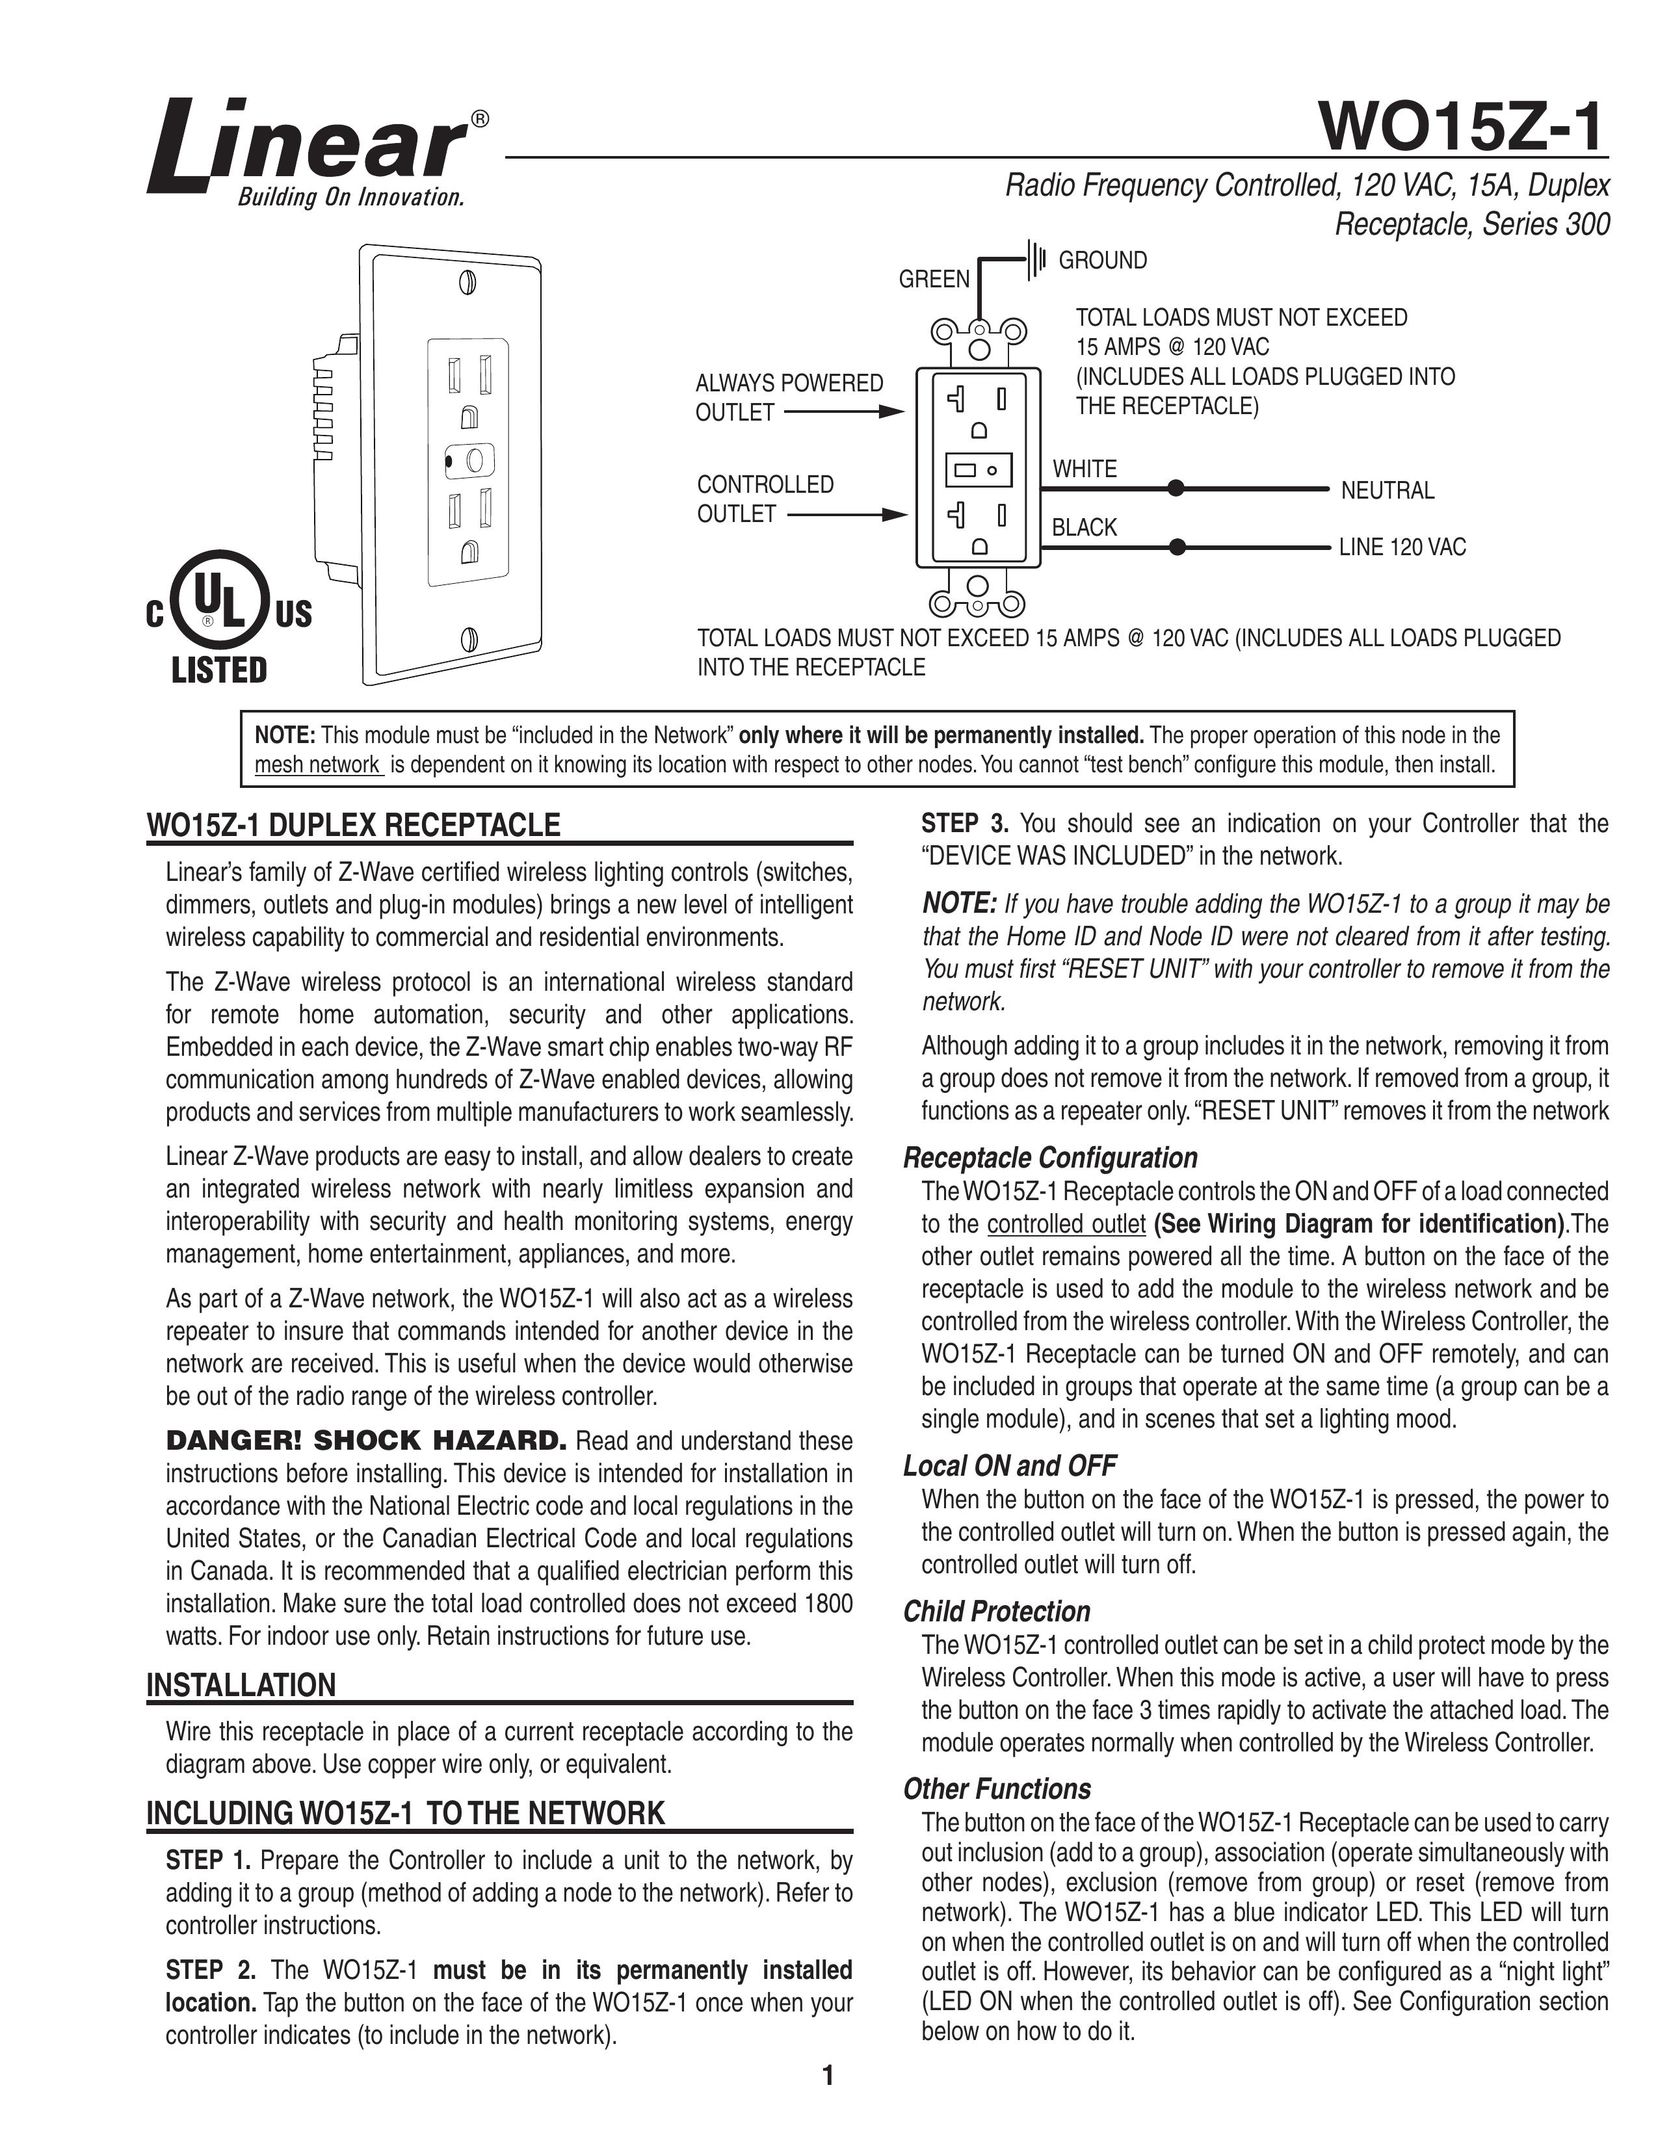 Linear WO15Z-1 Sander User Manual